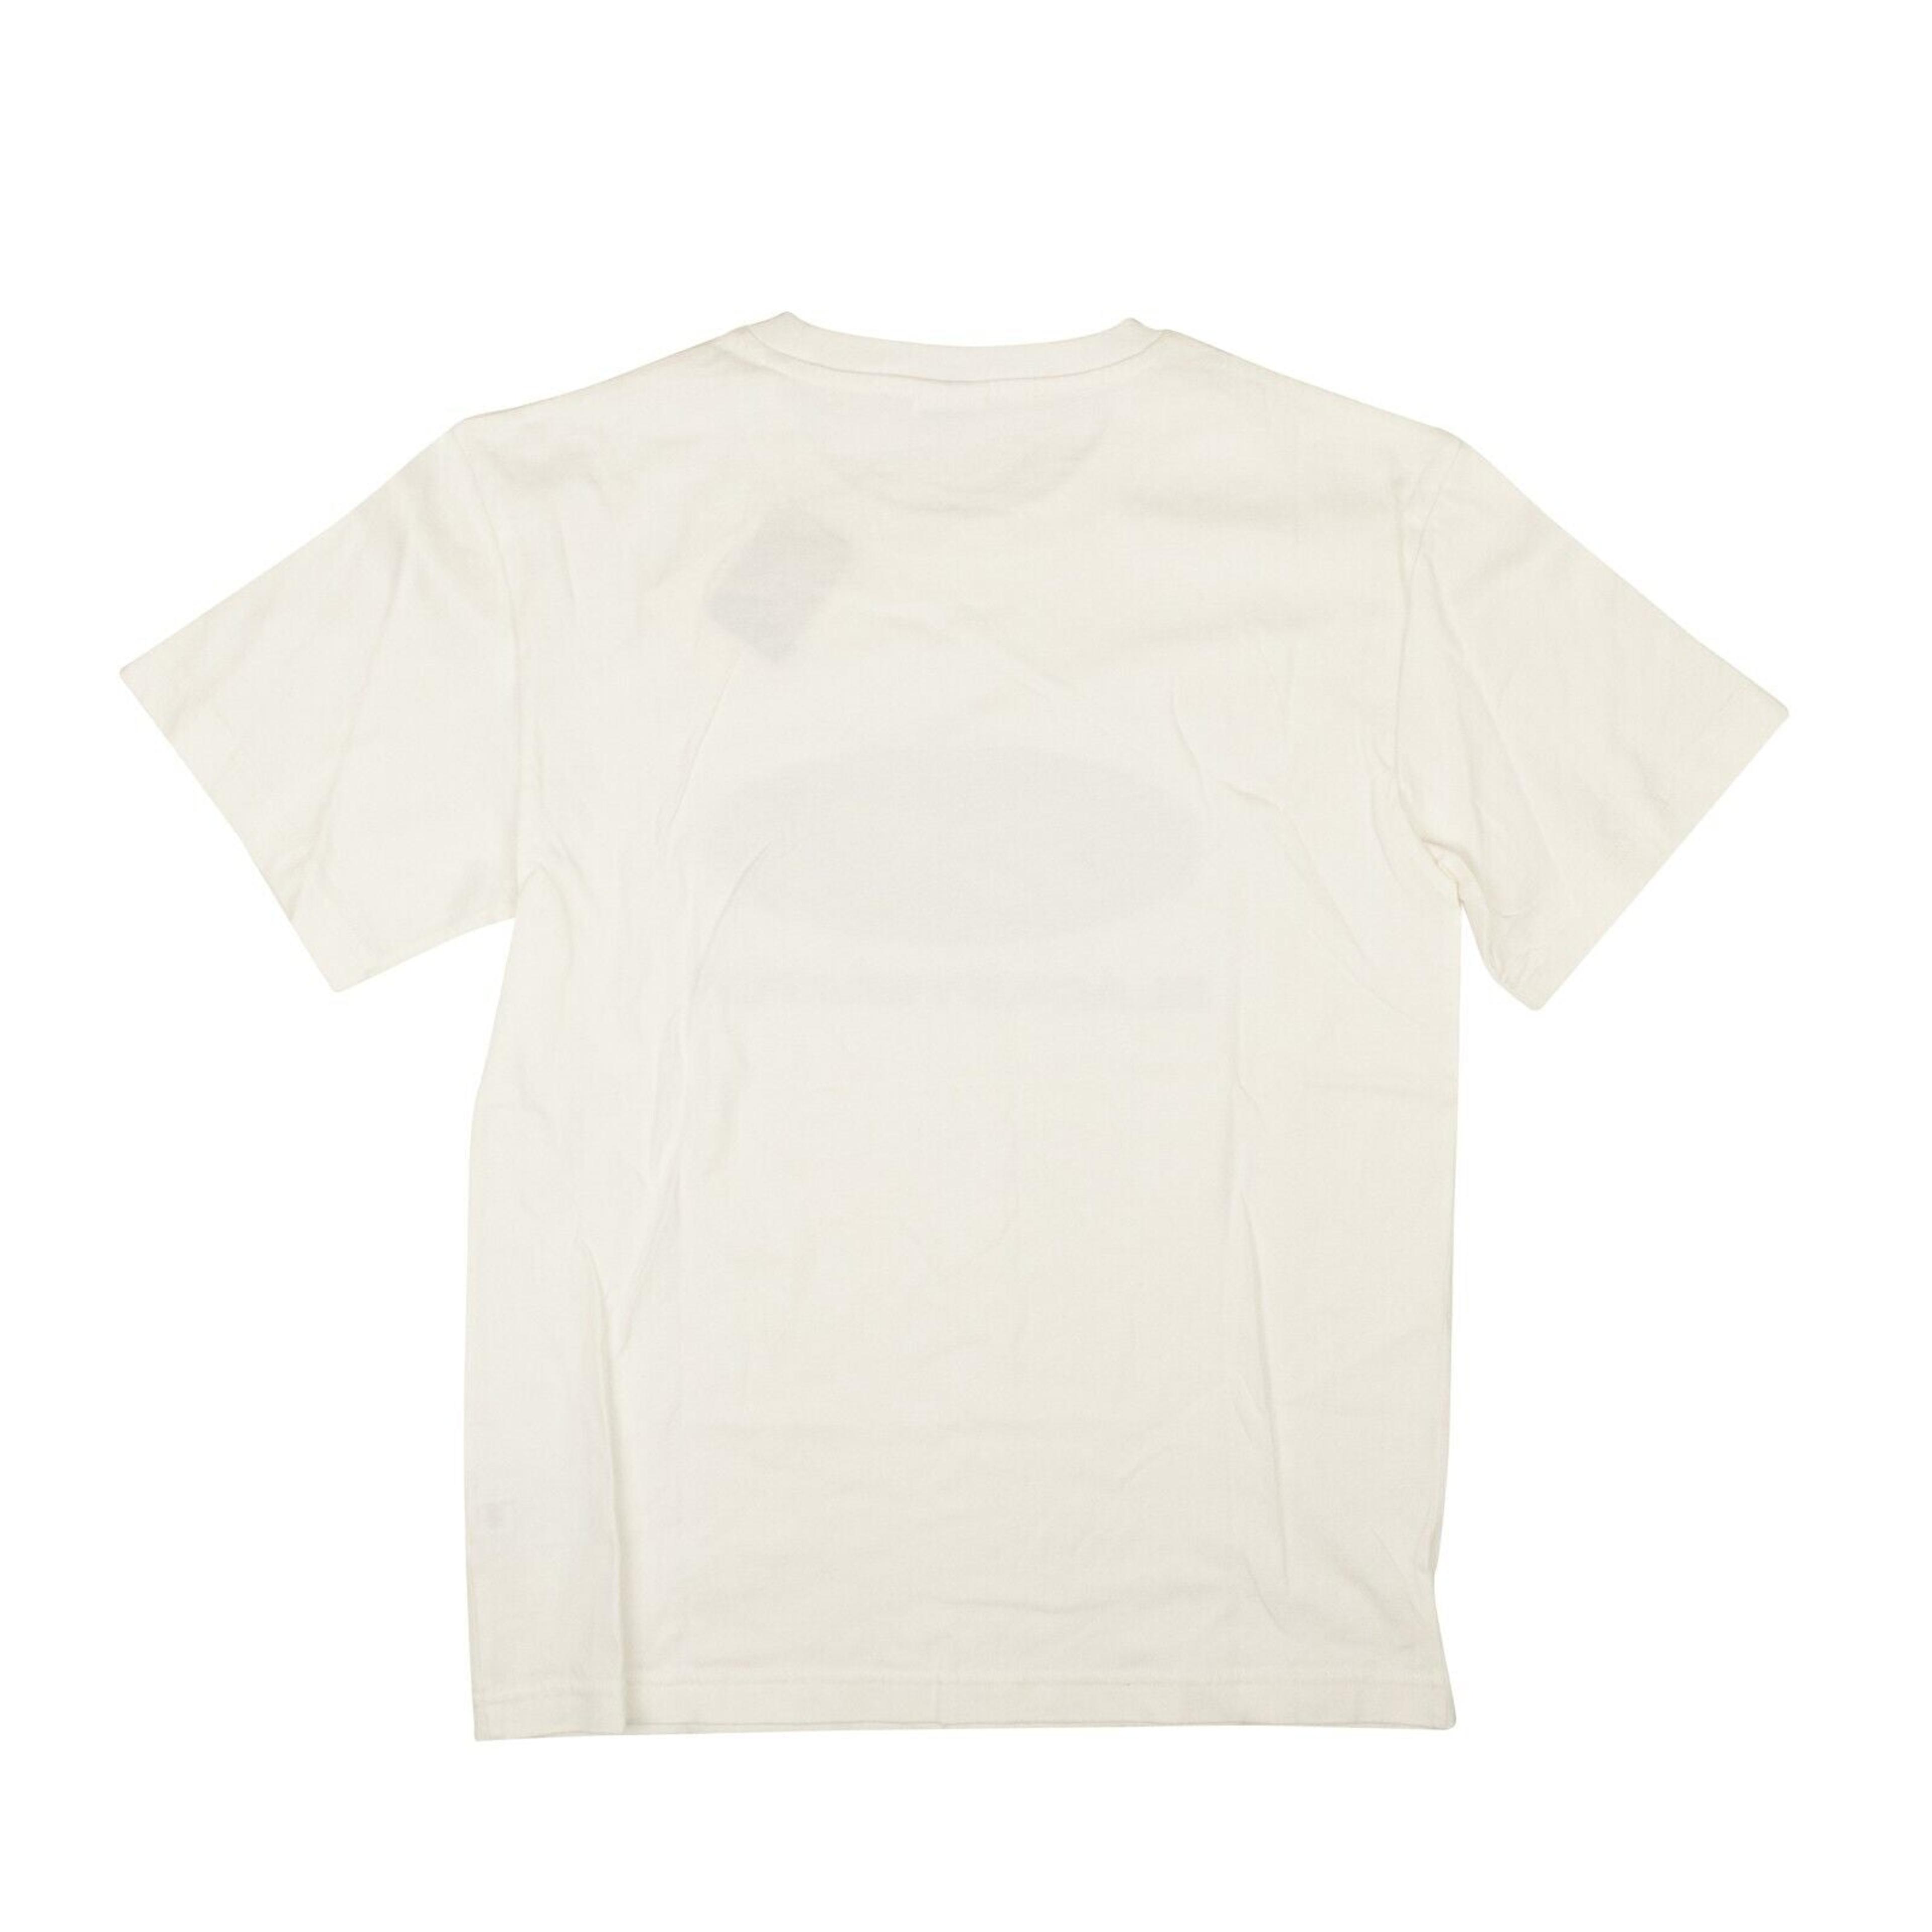 Alternate View 2 of x Reebok White Cotton T-Shirt